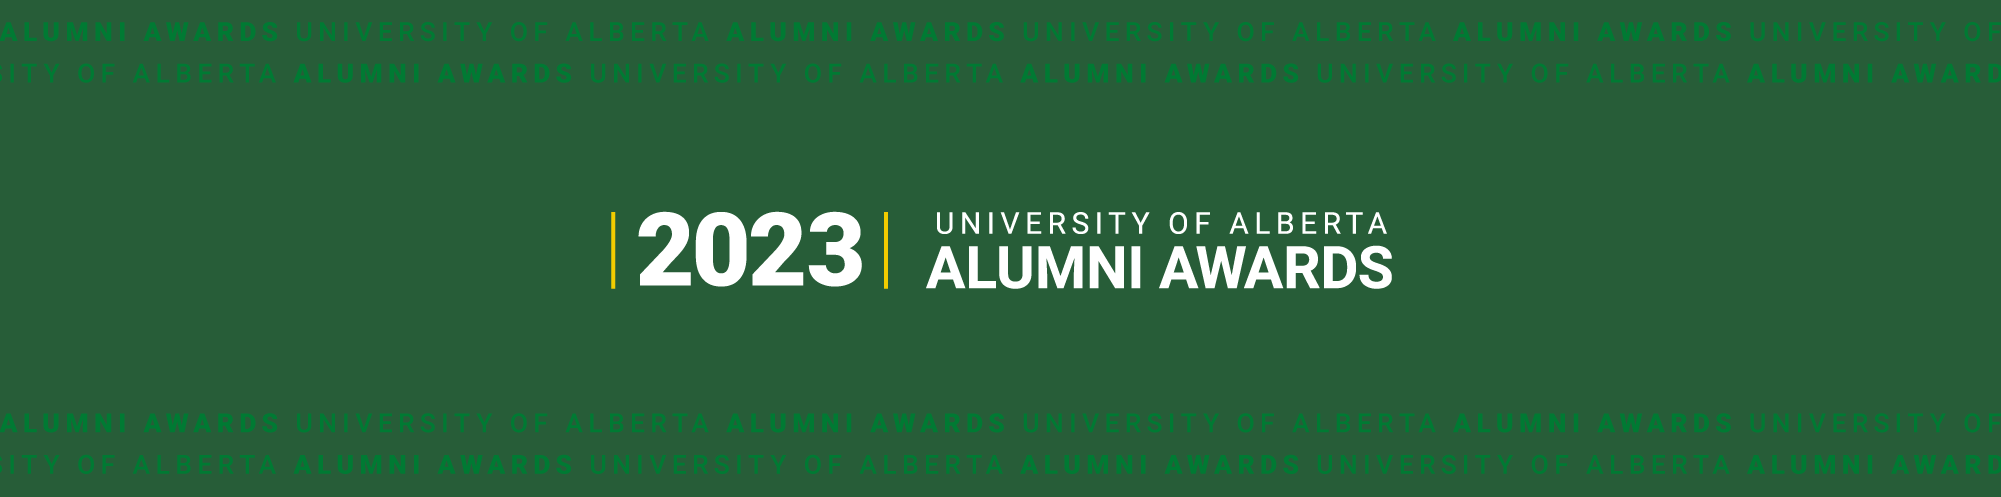 University of Alberta Alumni Awards 2023